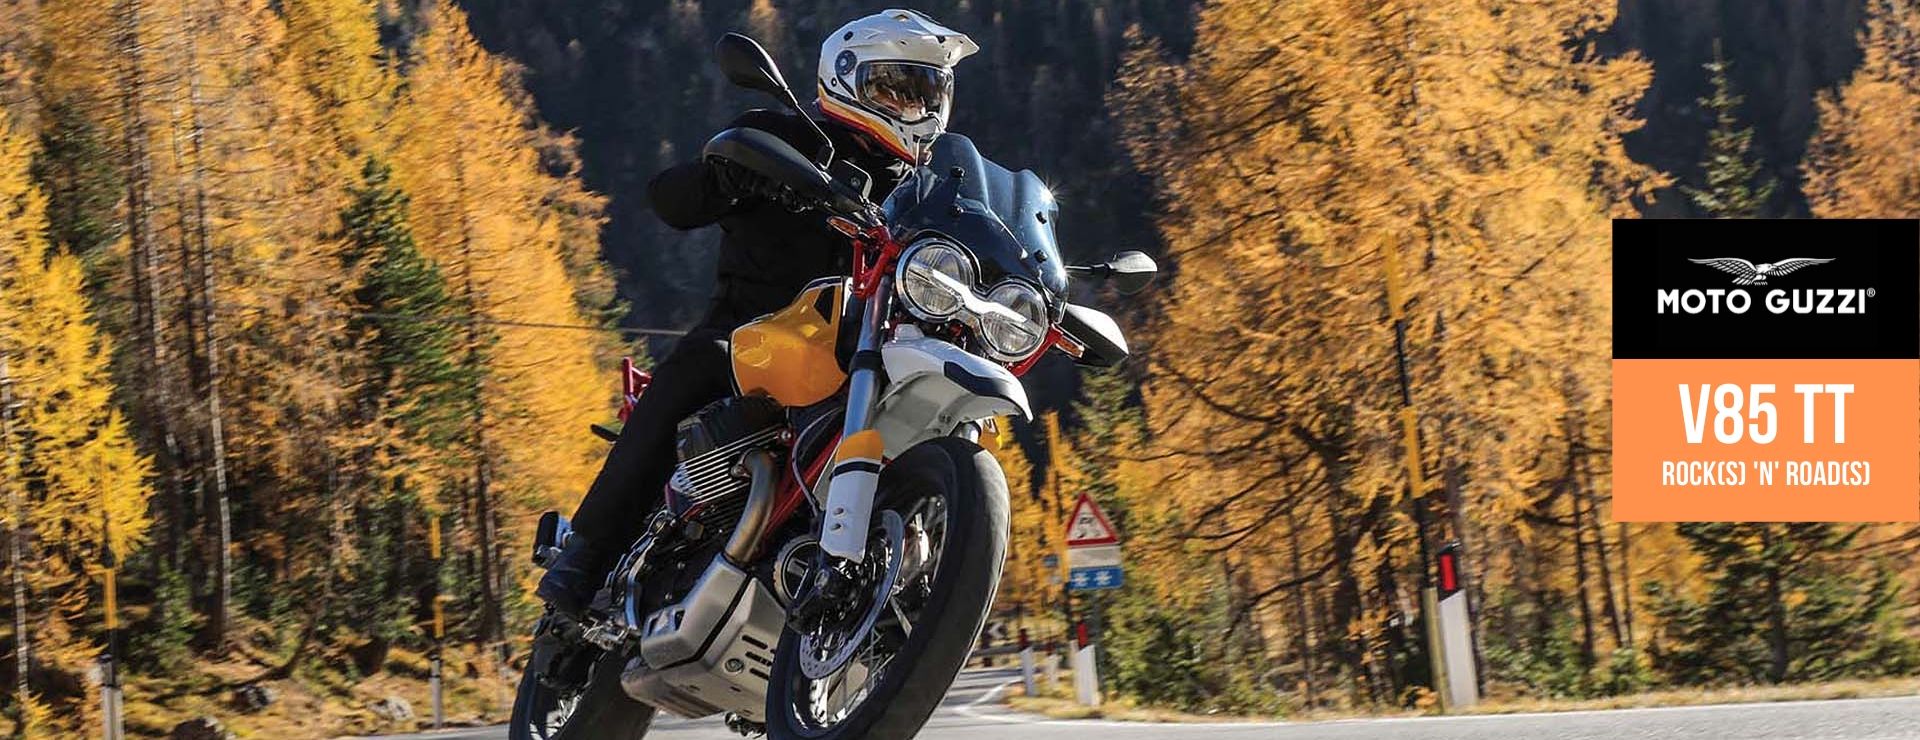 Moto Guzzi V85 TT - ROCK(S) ‘N’ ROAD(S). Test Ride Today!